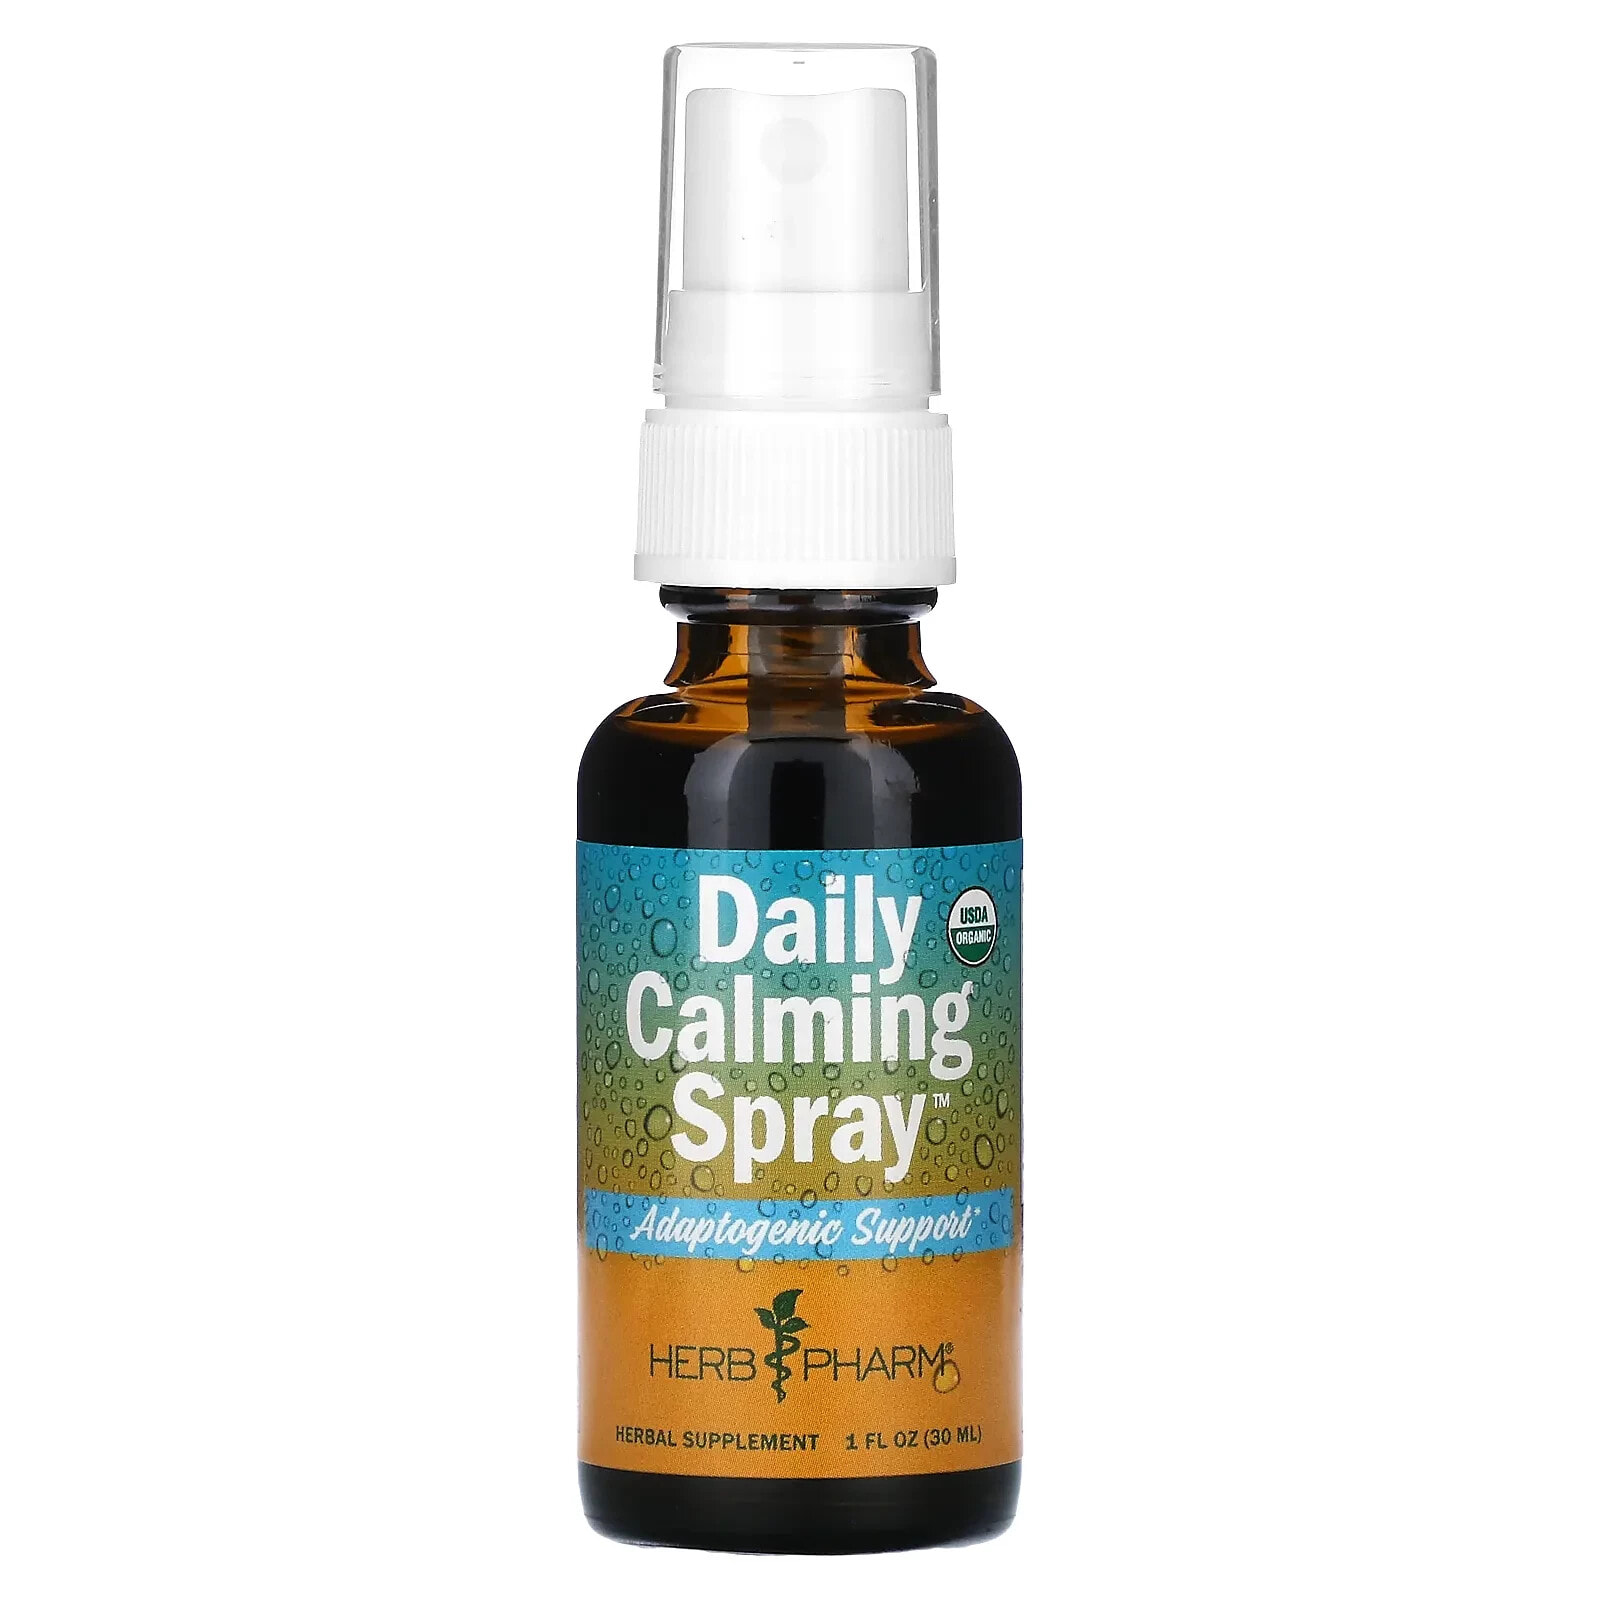 Daily Calming Spray, 1 fl oz (30 ml)